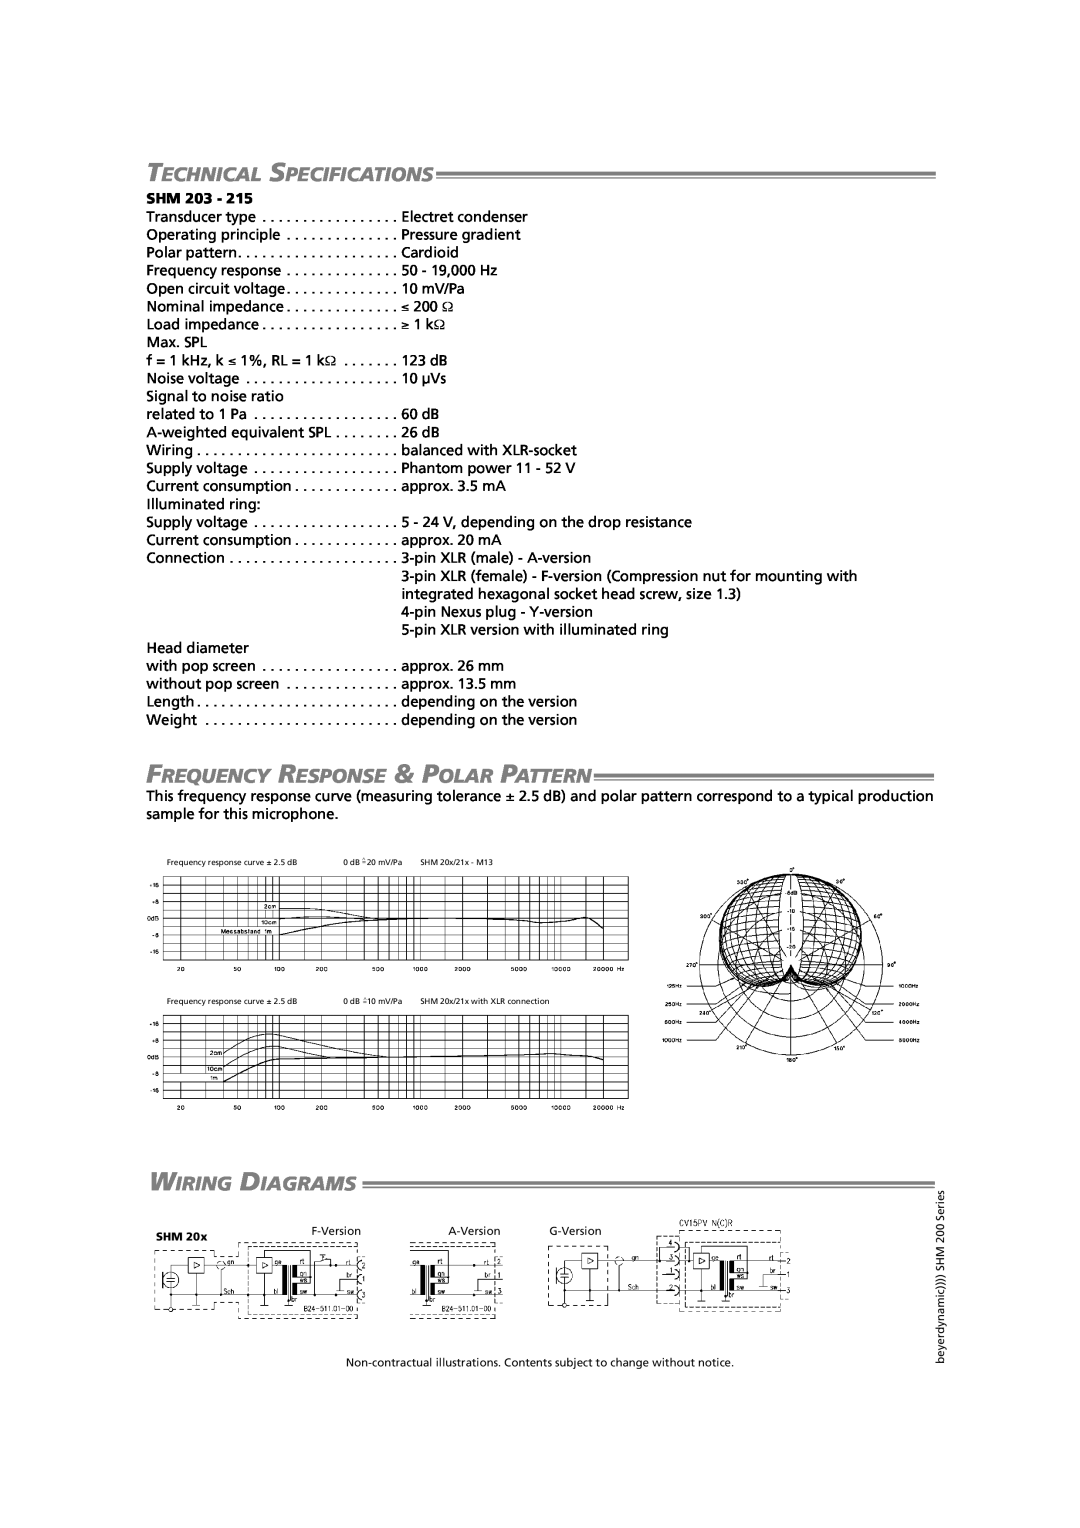 Beyerdynamic ZSH 23 FG, ZSH 51 (CM) Technical Specifications, Frequency Response & Polar Pattern, Wiring Diagrams, SHM 203 